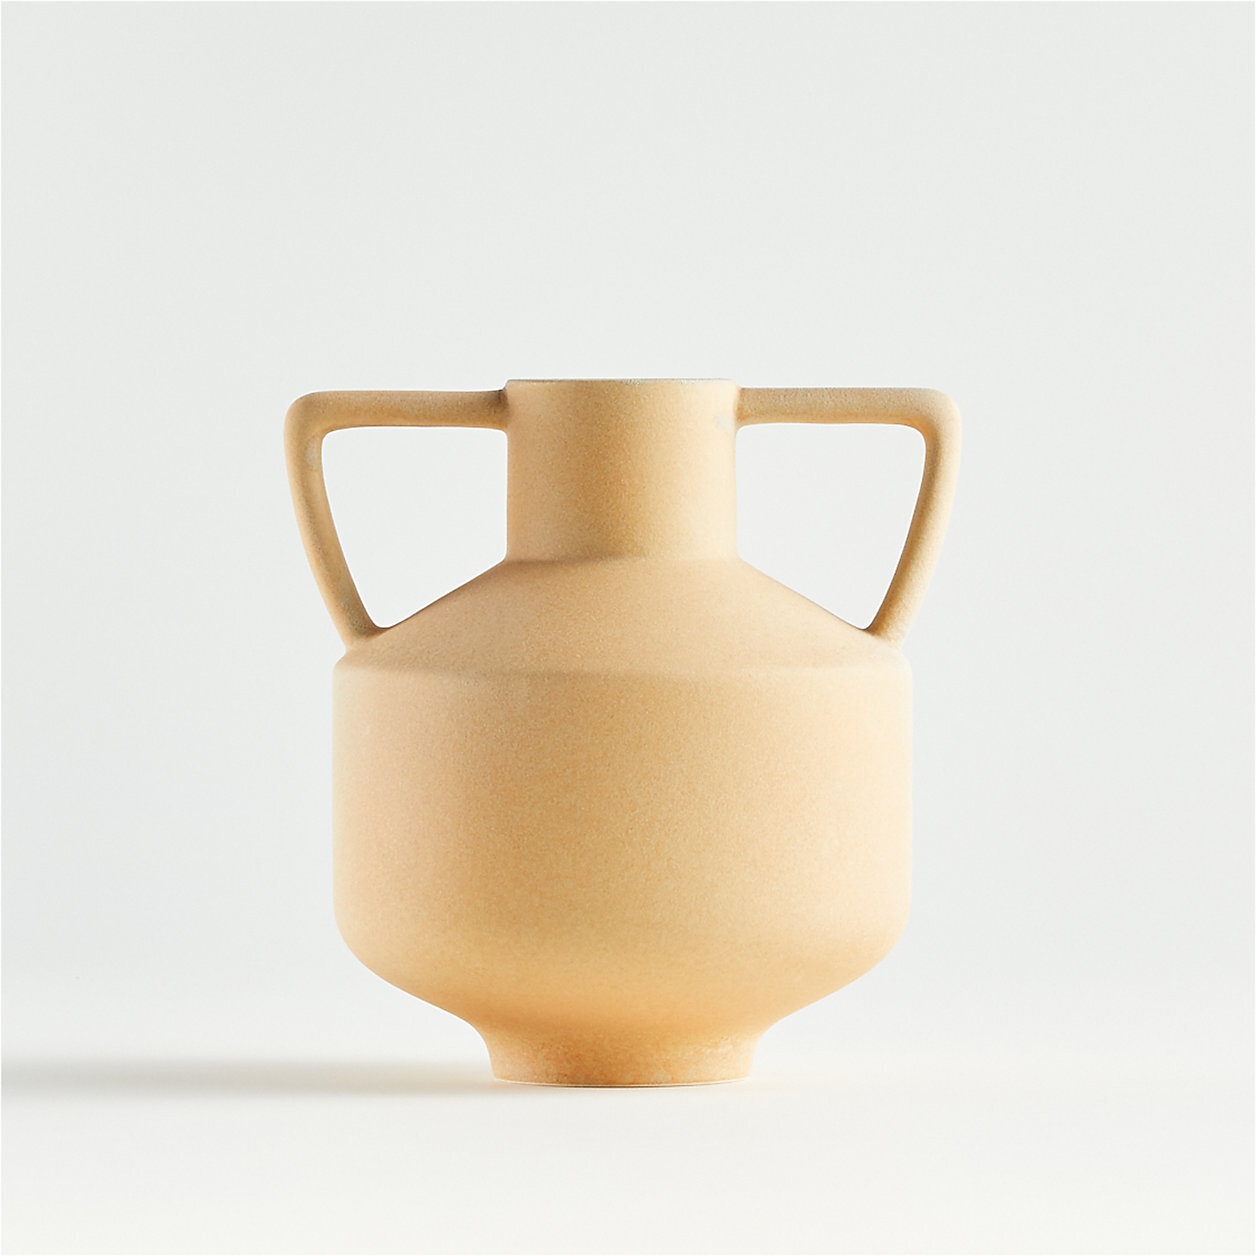 Olcott Small Yellow Vase with Handles.jpg